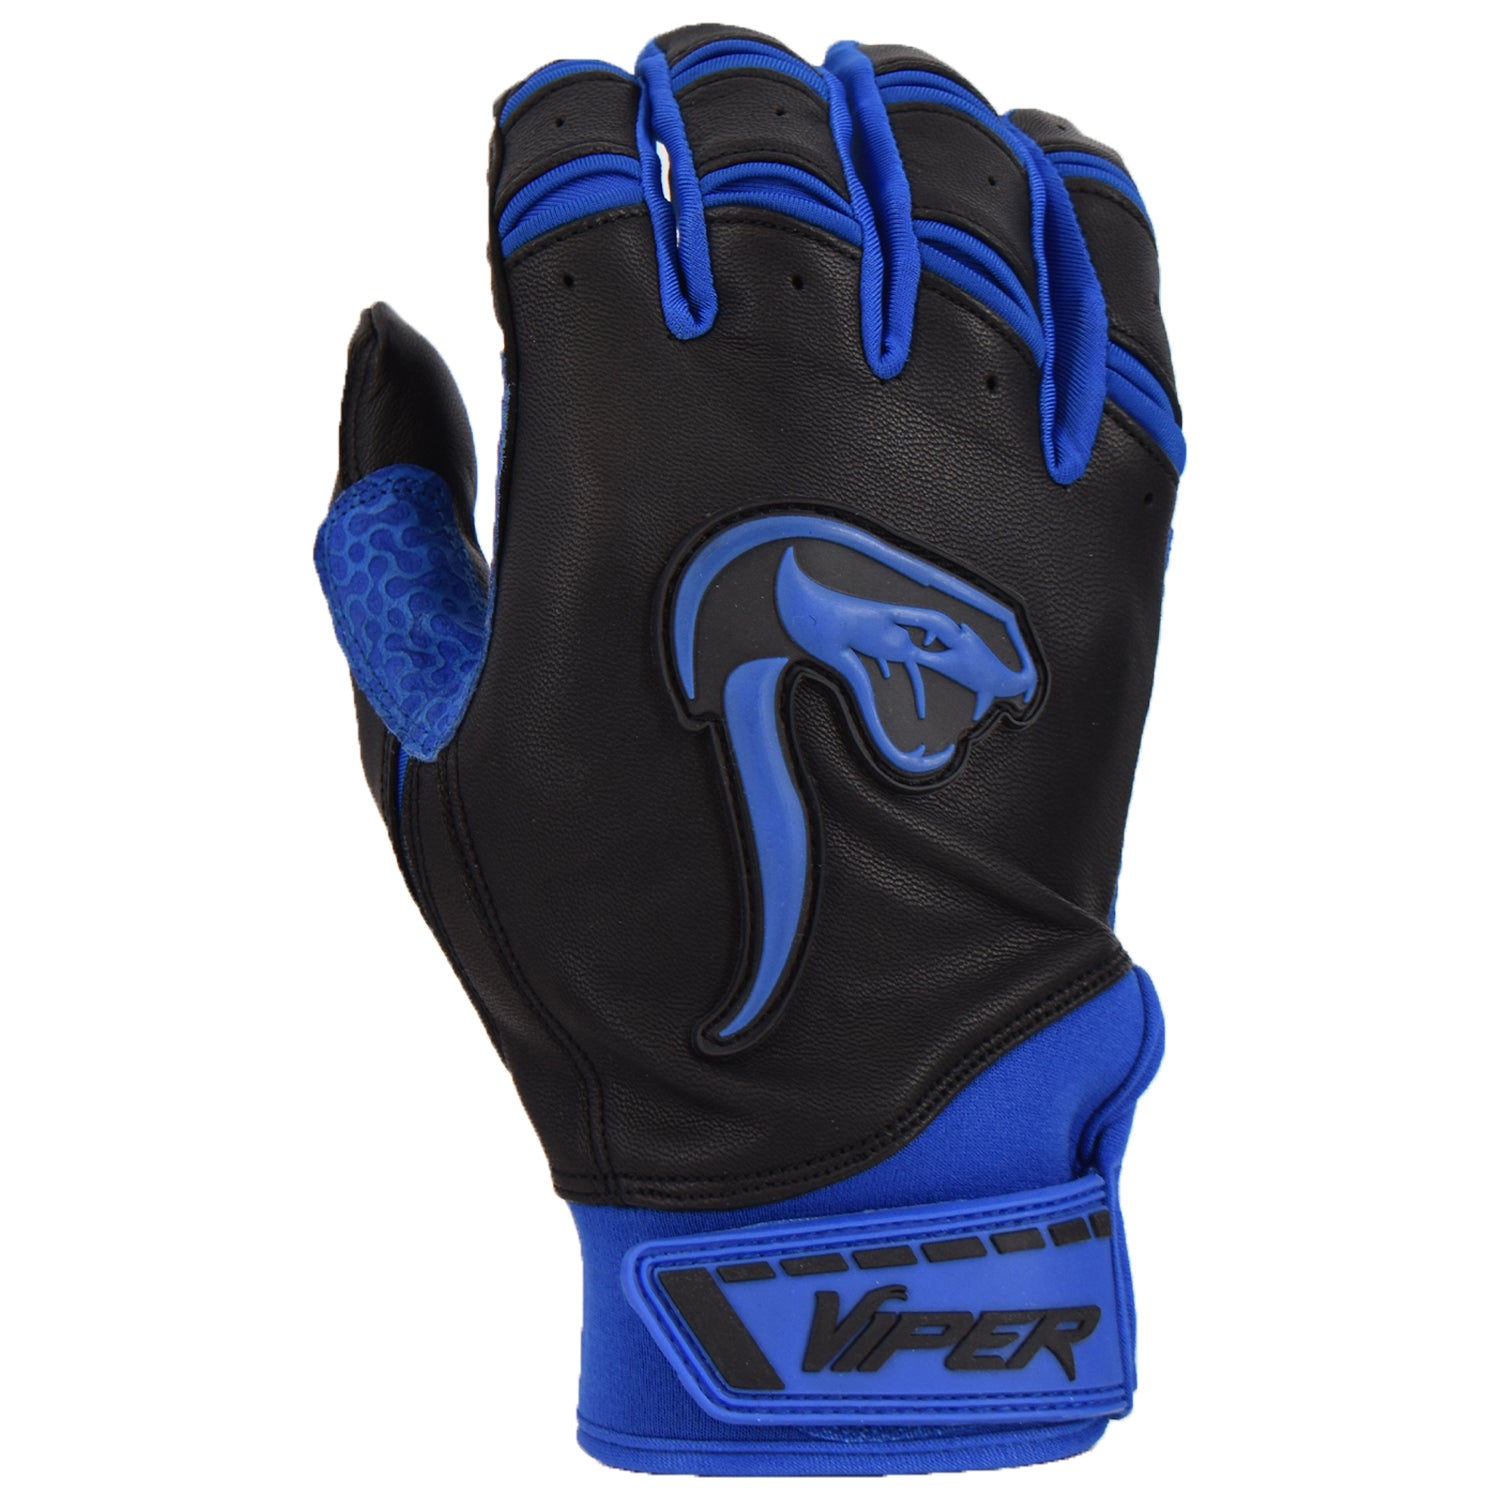 Viper Grindstone Short Cuff Batting Glove - Black/Royal Blue